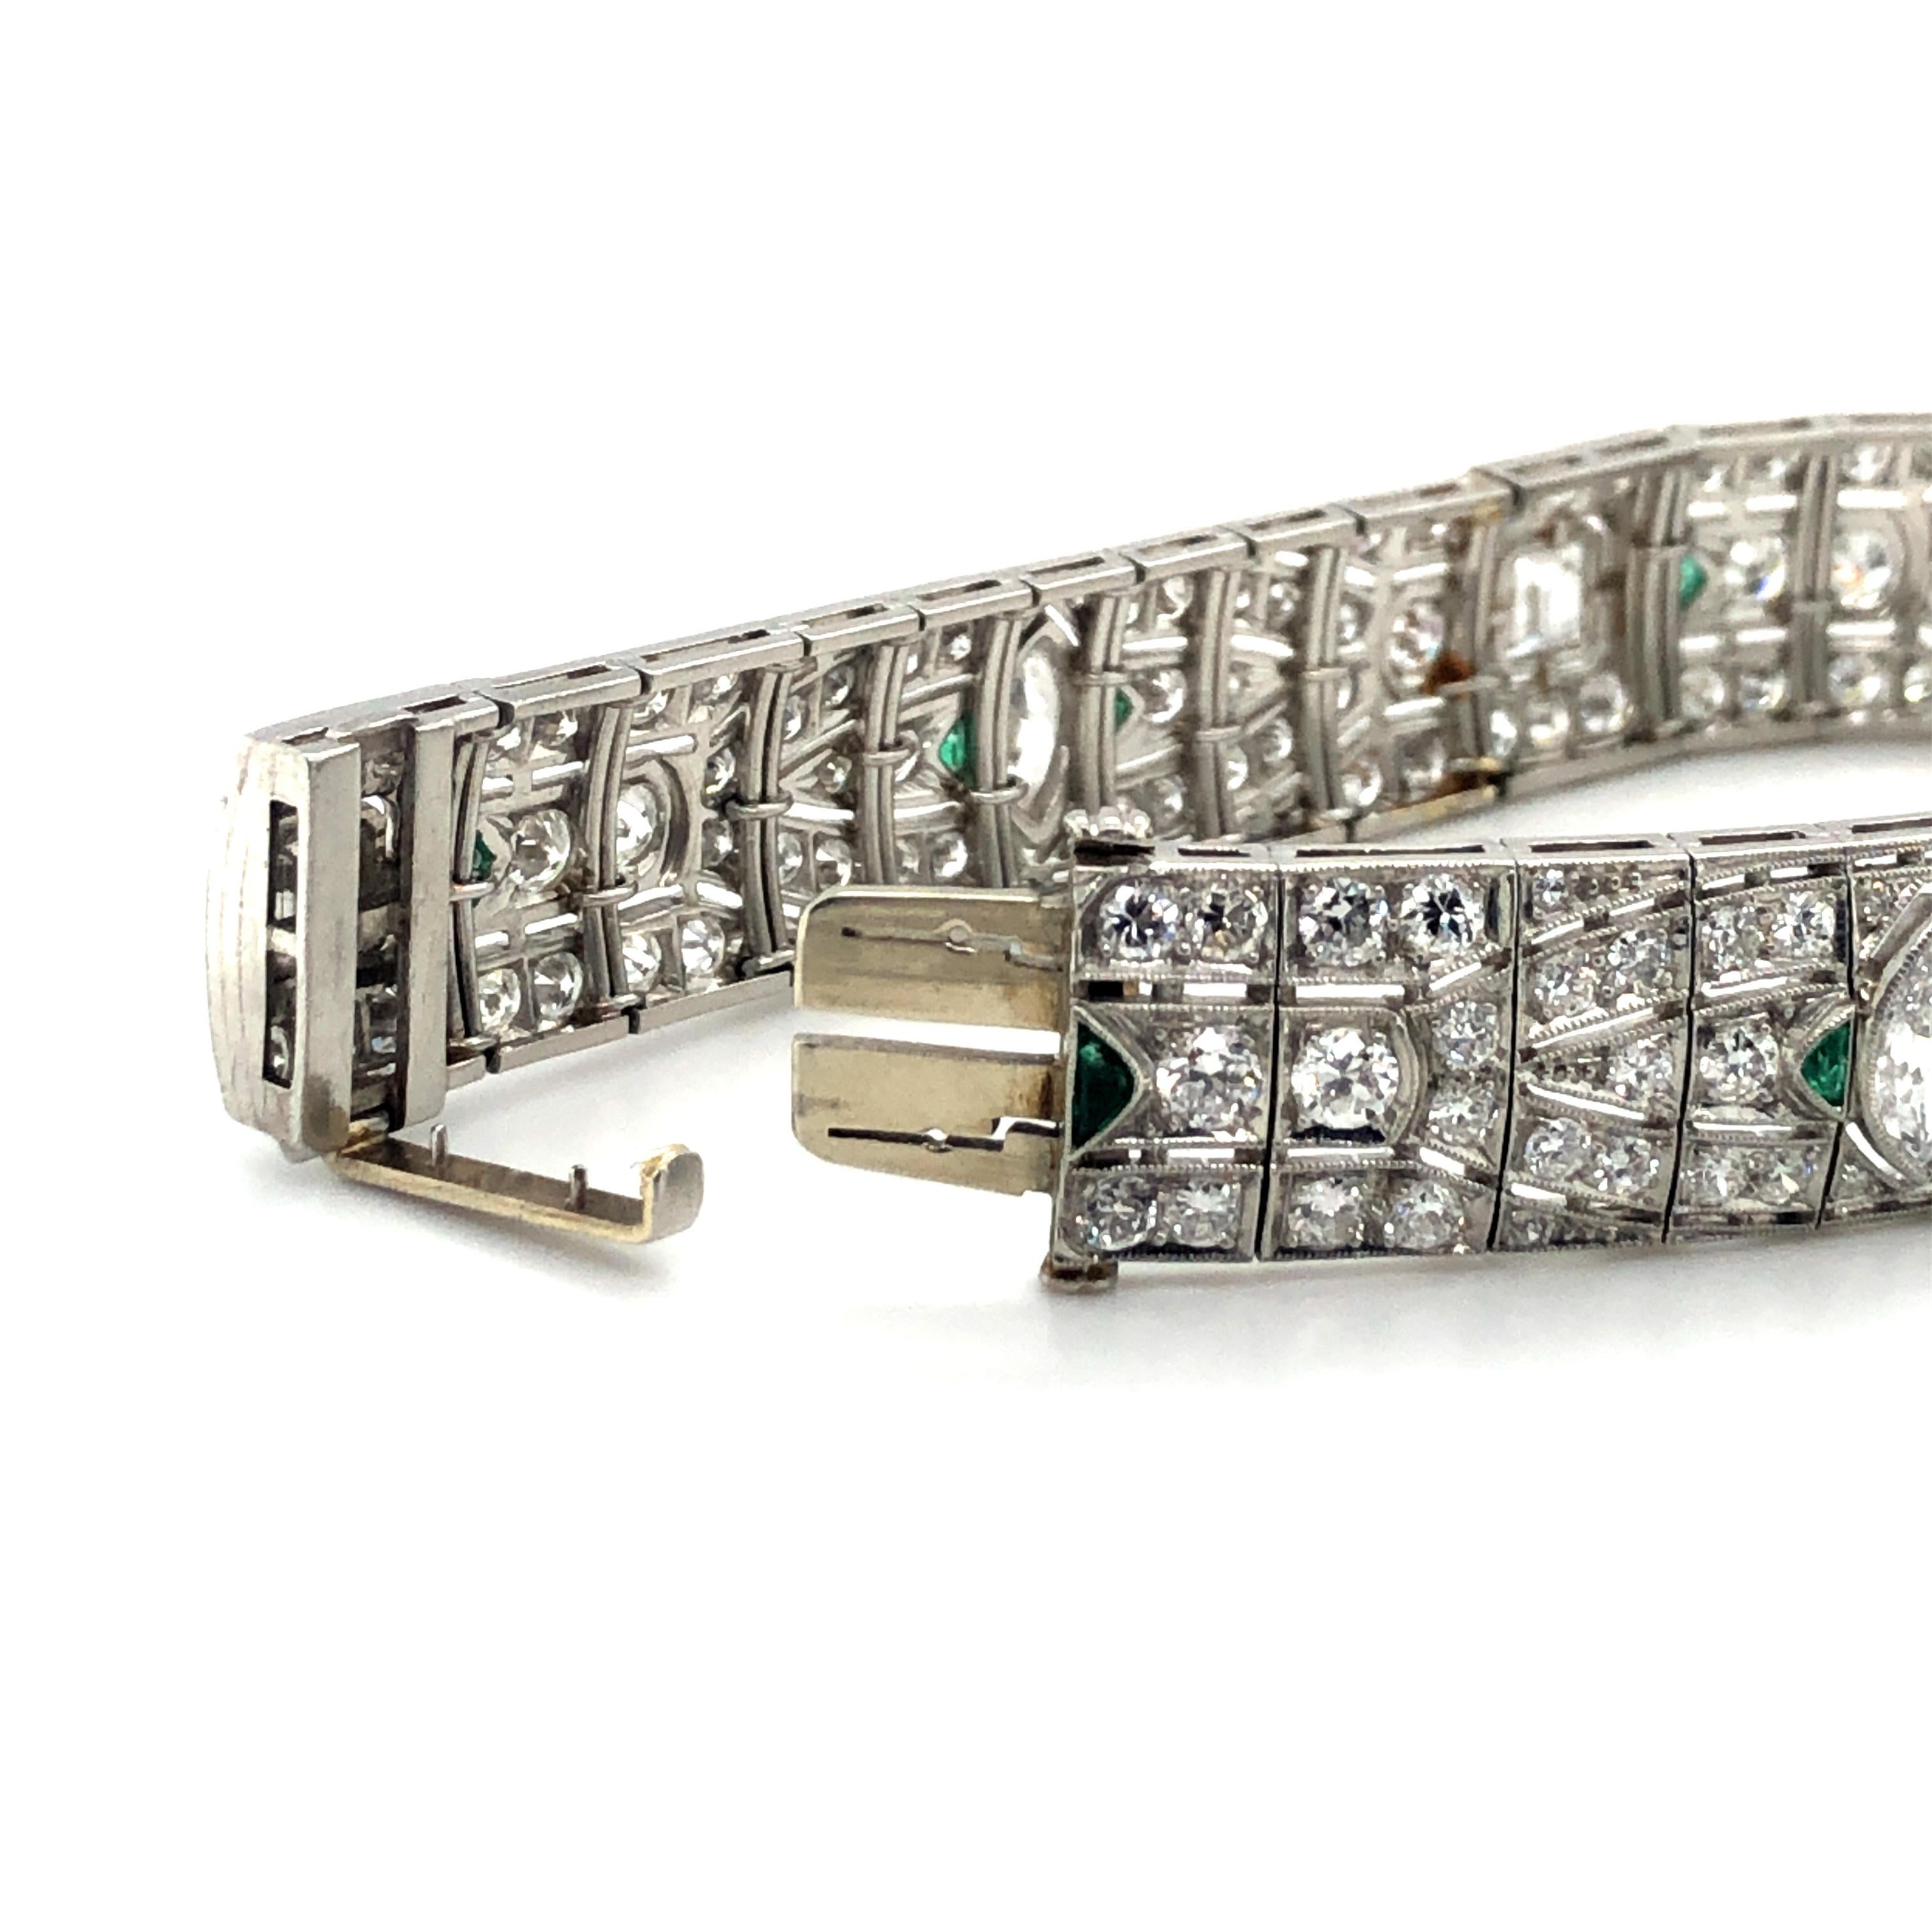 Stunning Diamond and Emerald Art Deco Bracelet in Platinum 950 For Sale 5